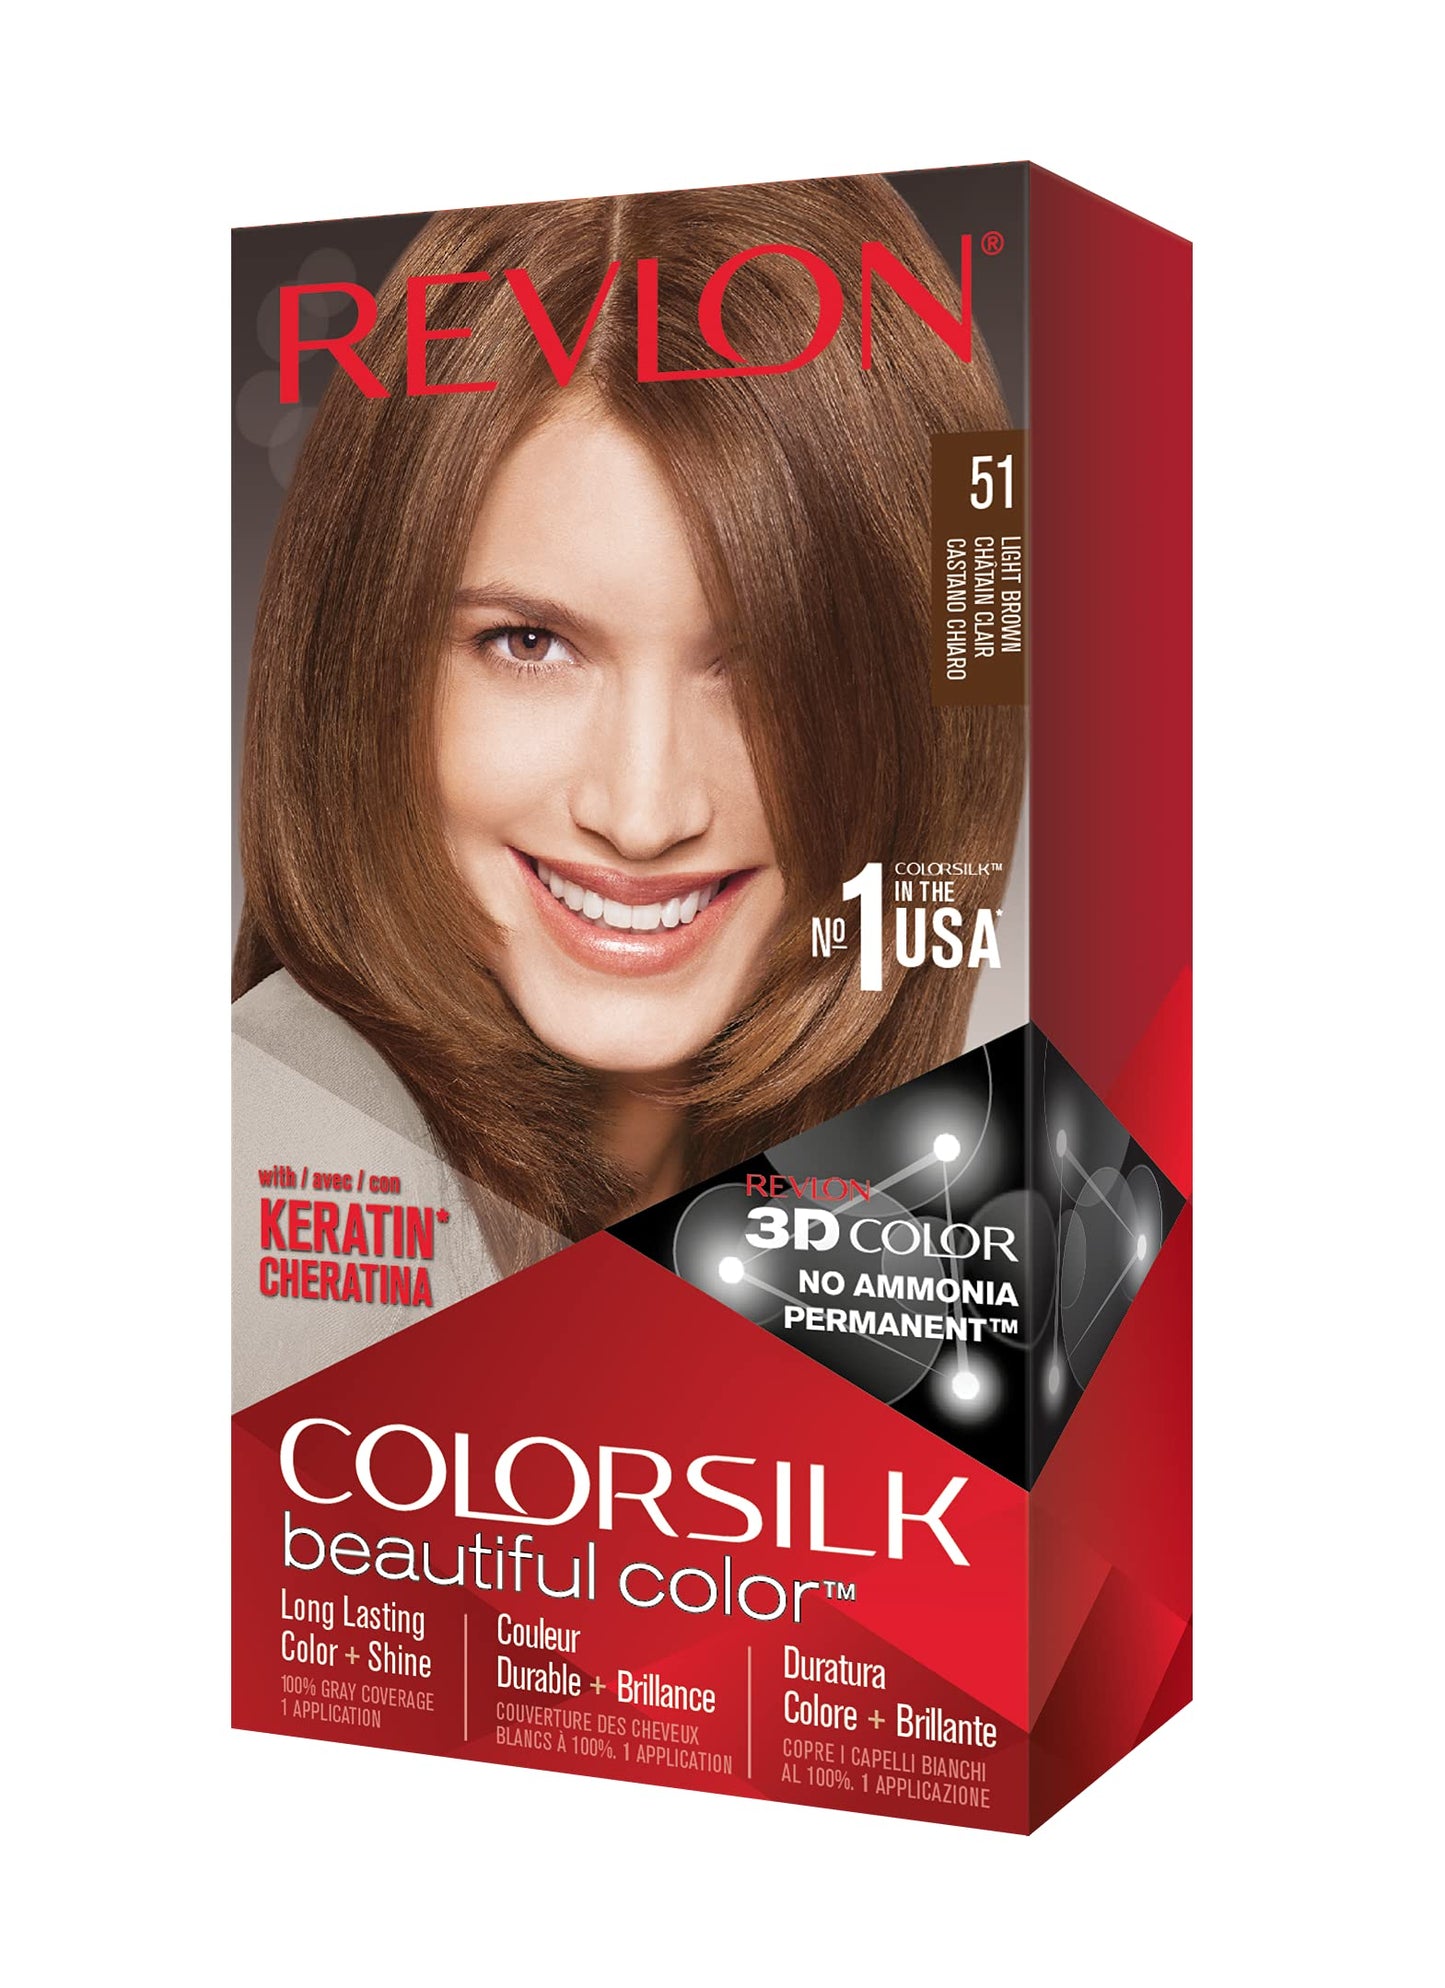 Revlon Colorsilk Hair Color 51 Light Brown USA - 1ct/3PK